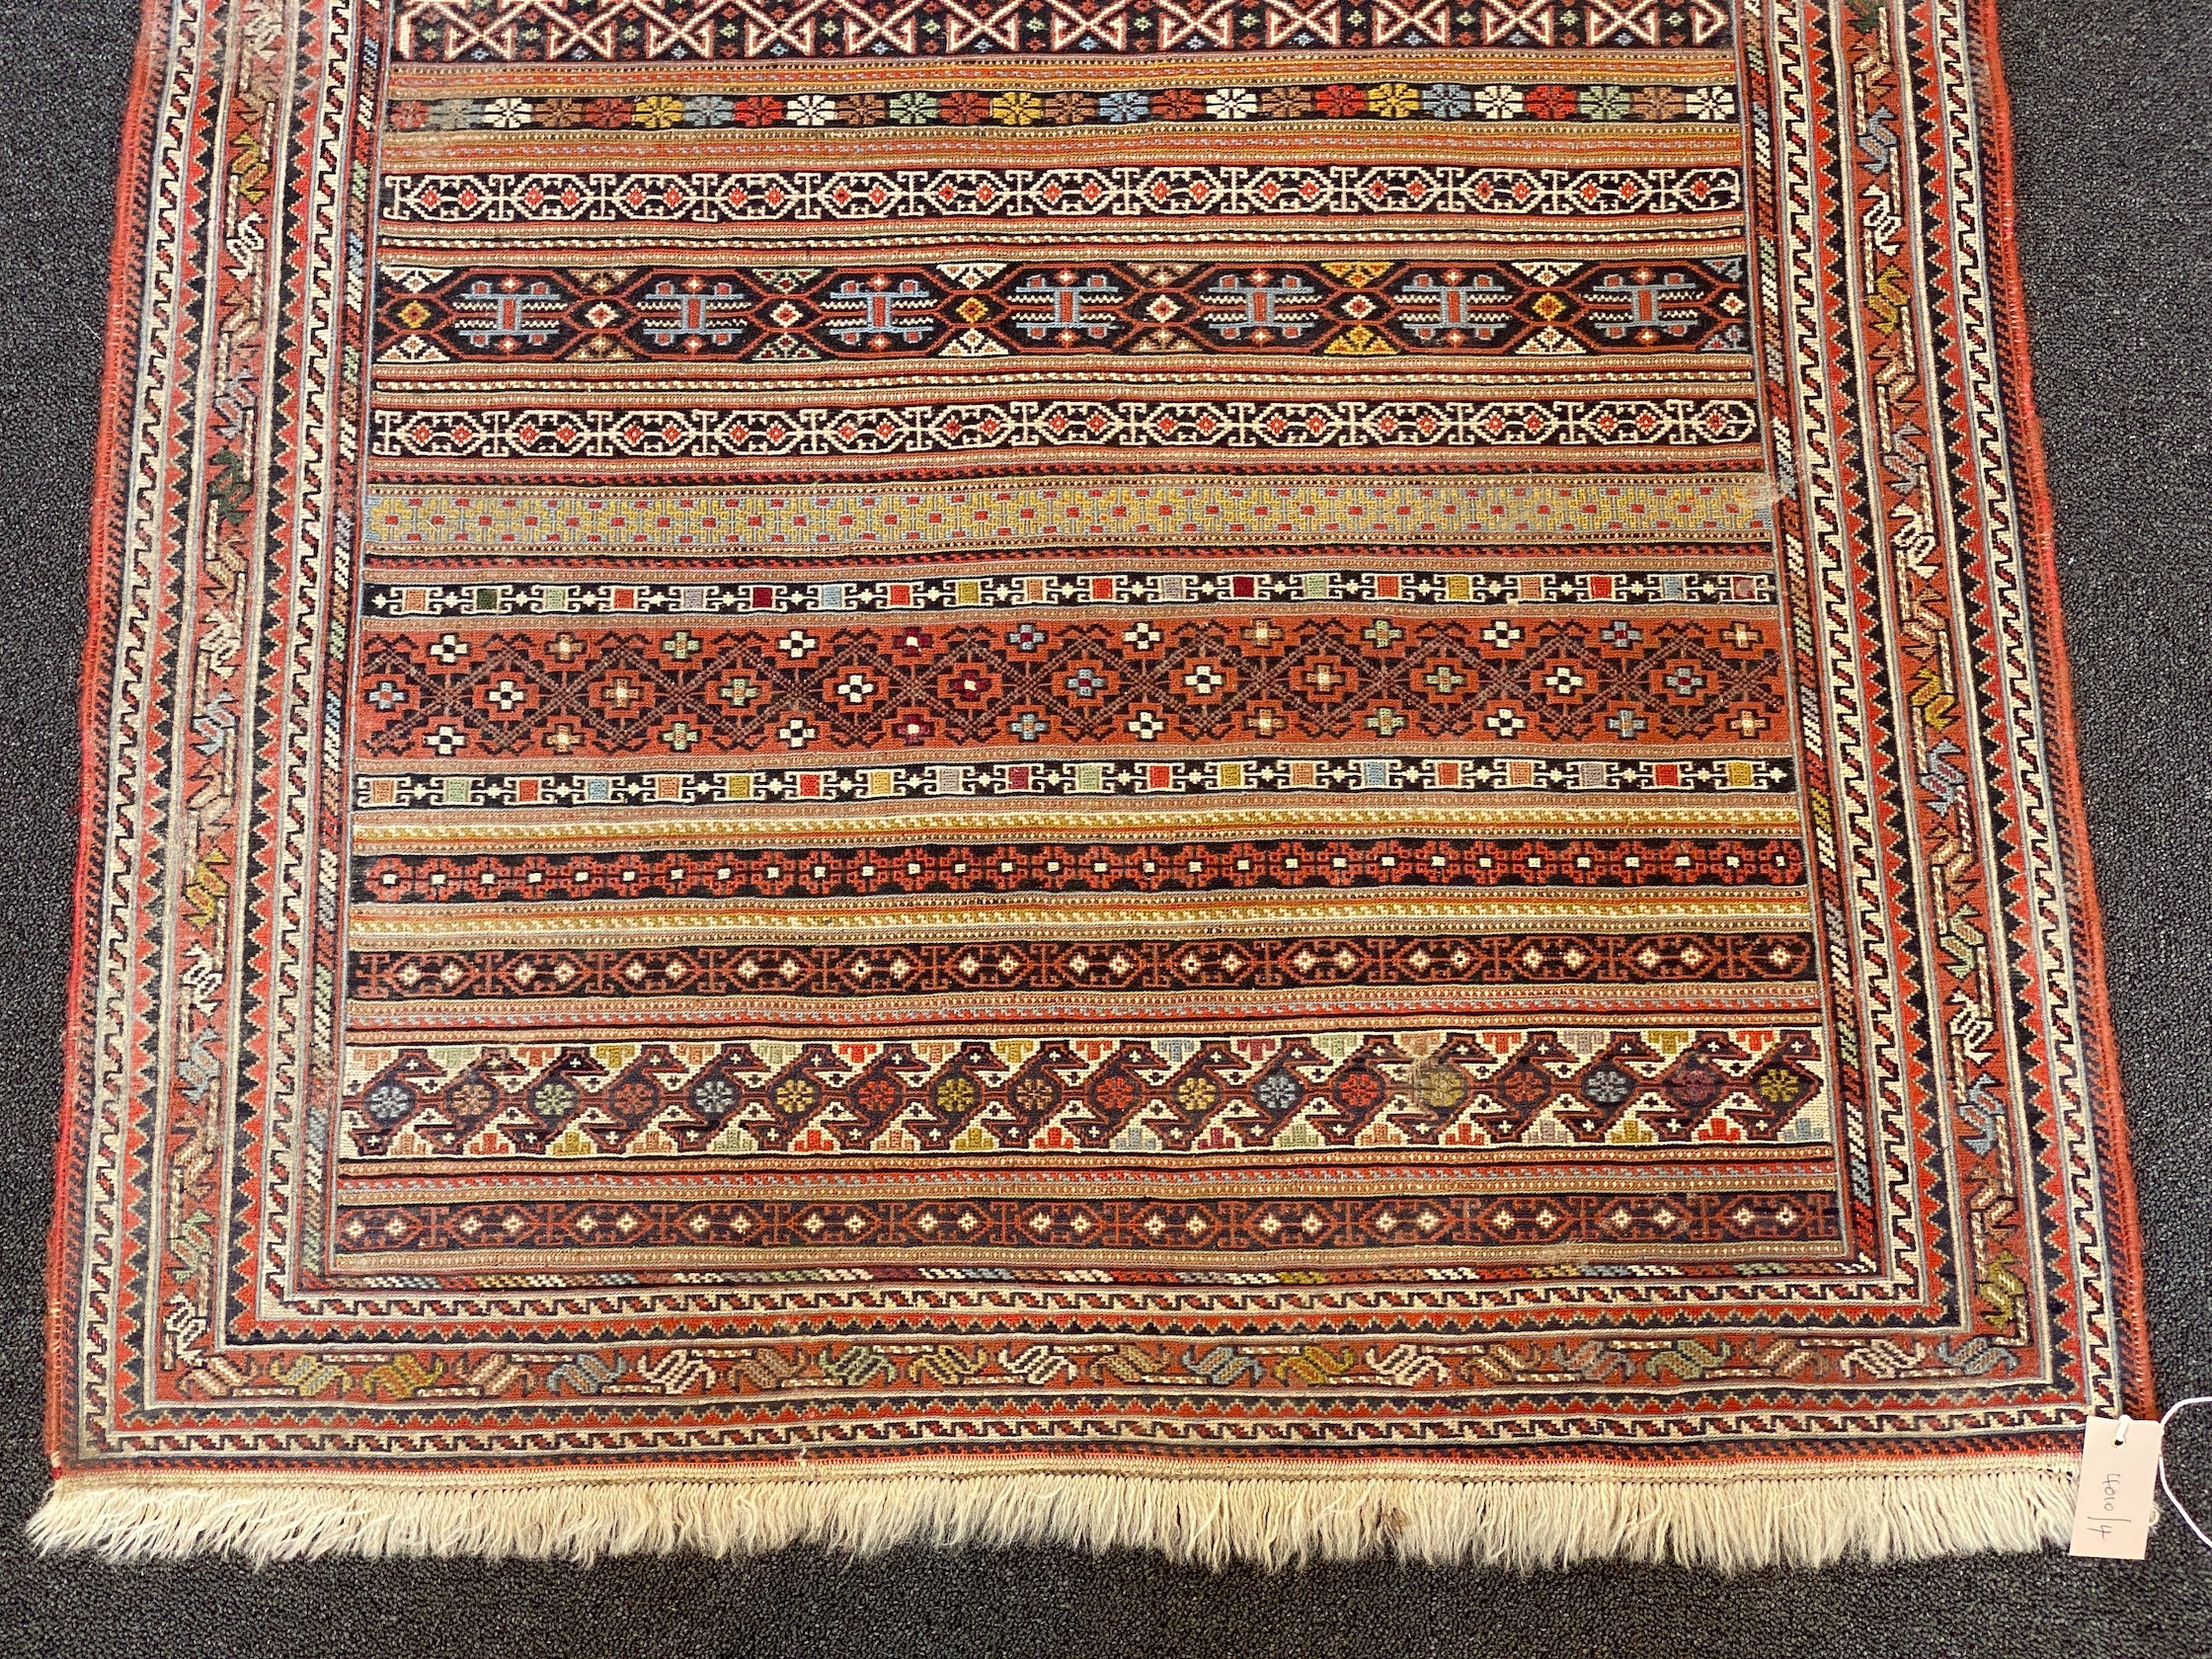 A fine Sumac flatweave polychrome rug 160 x 100 cms